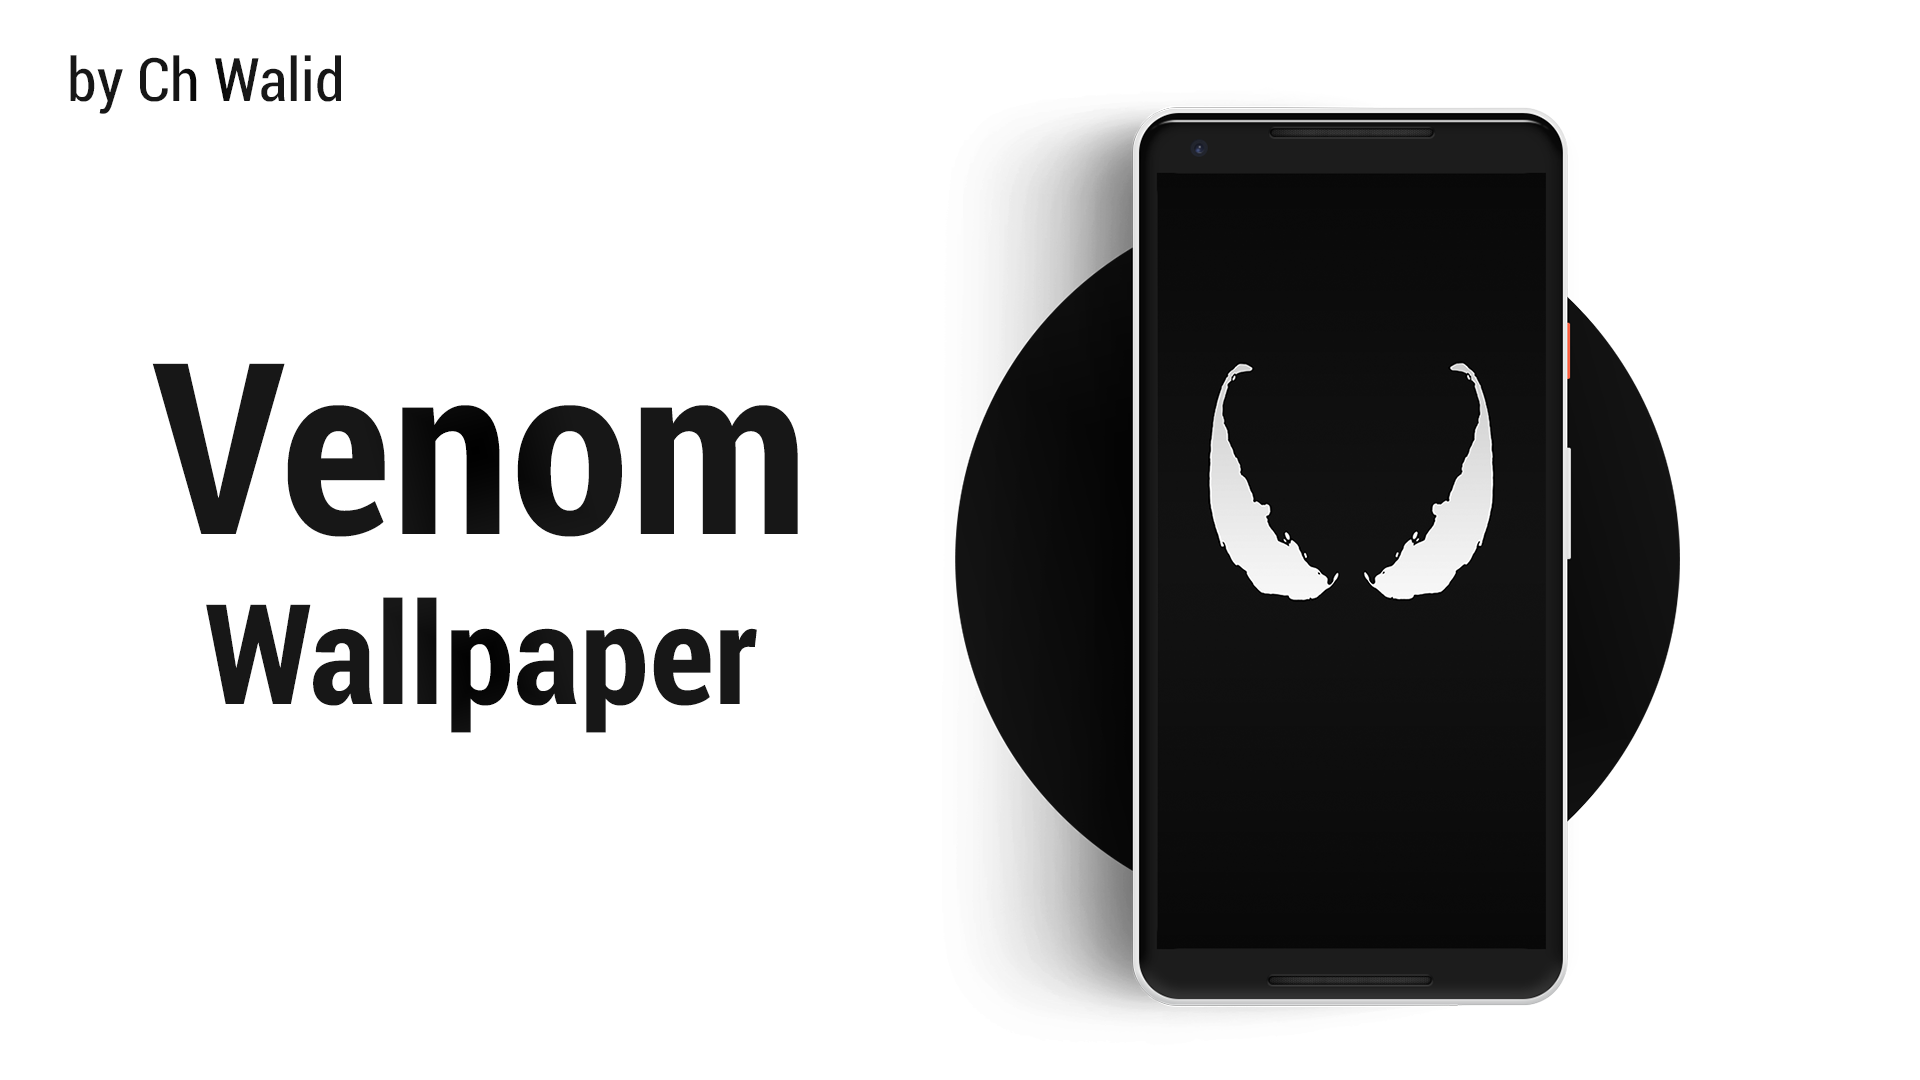 Venom — Wallpapers - CHWALID - Medium